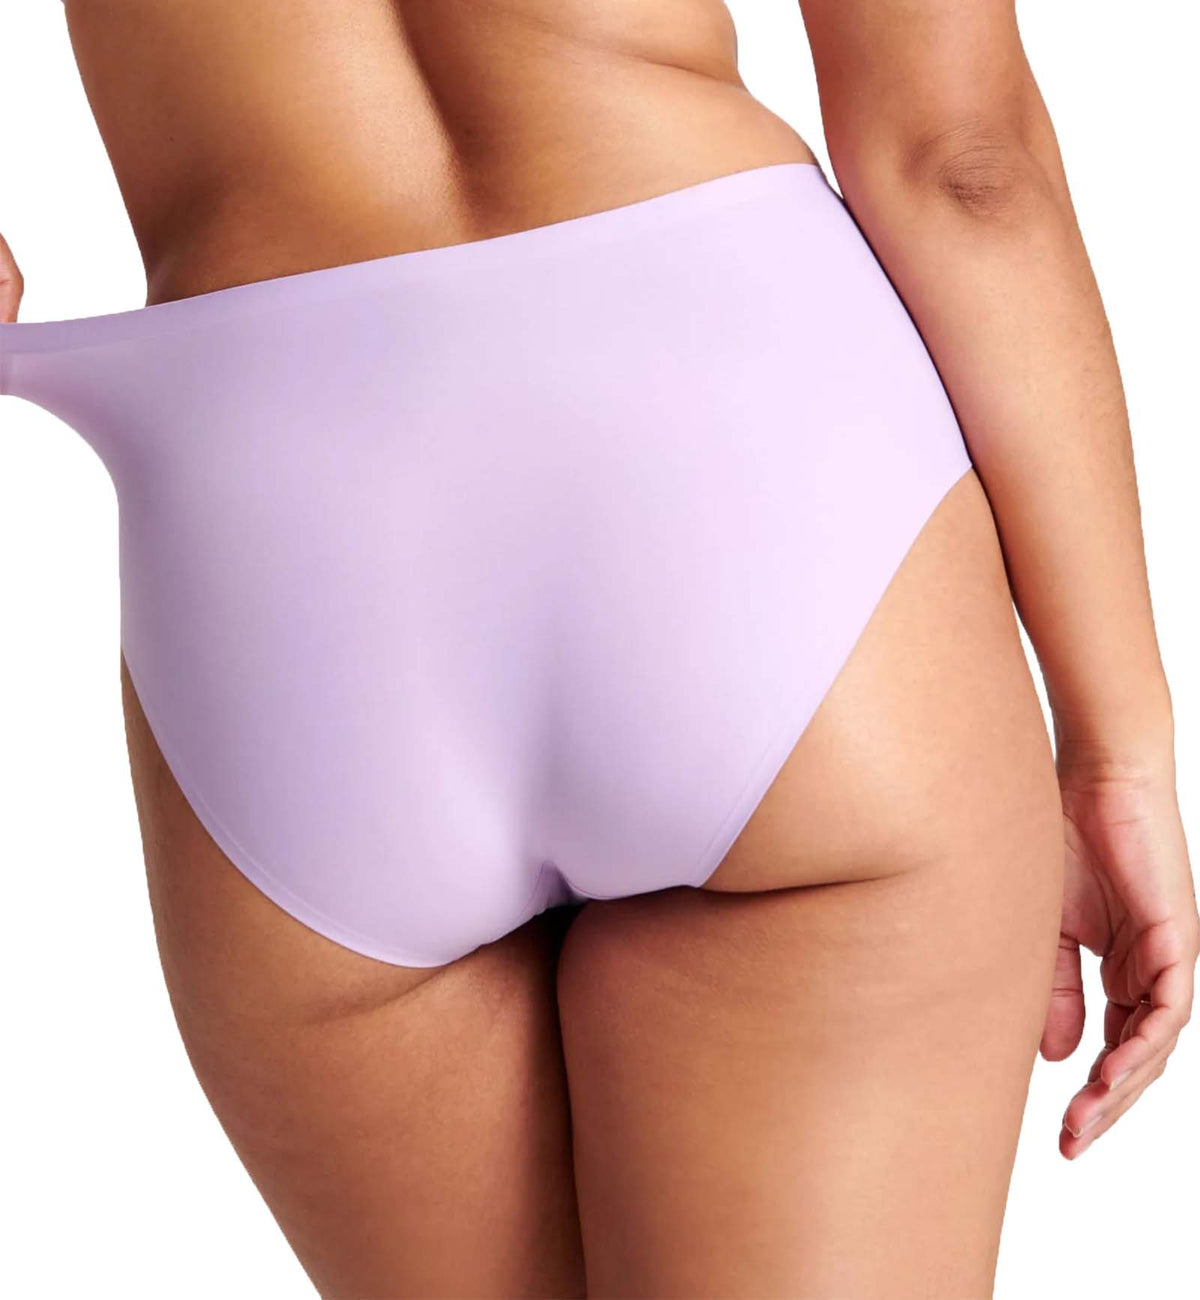 Evelyn &amp; Bobbie High-Waisted Retro Bikini Panty (1704),US 0-14,Lavender - Lavender,US 0-14